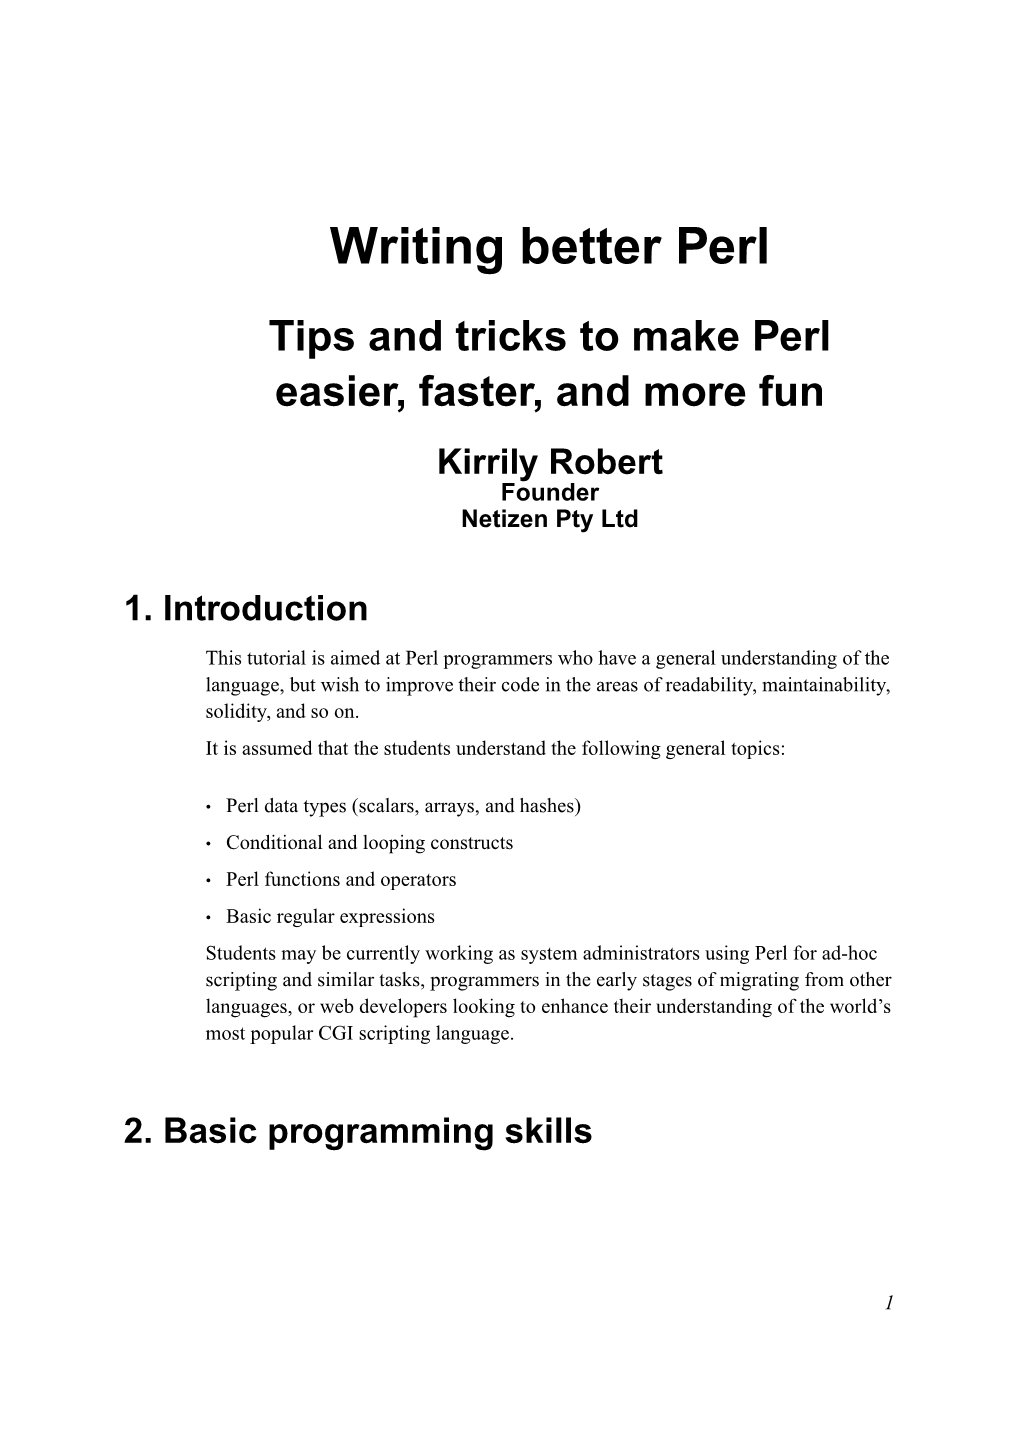 Writing Better Perl